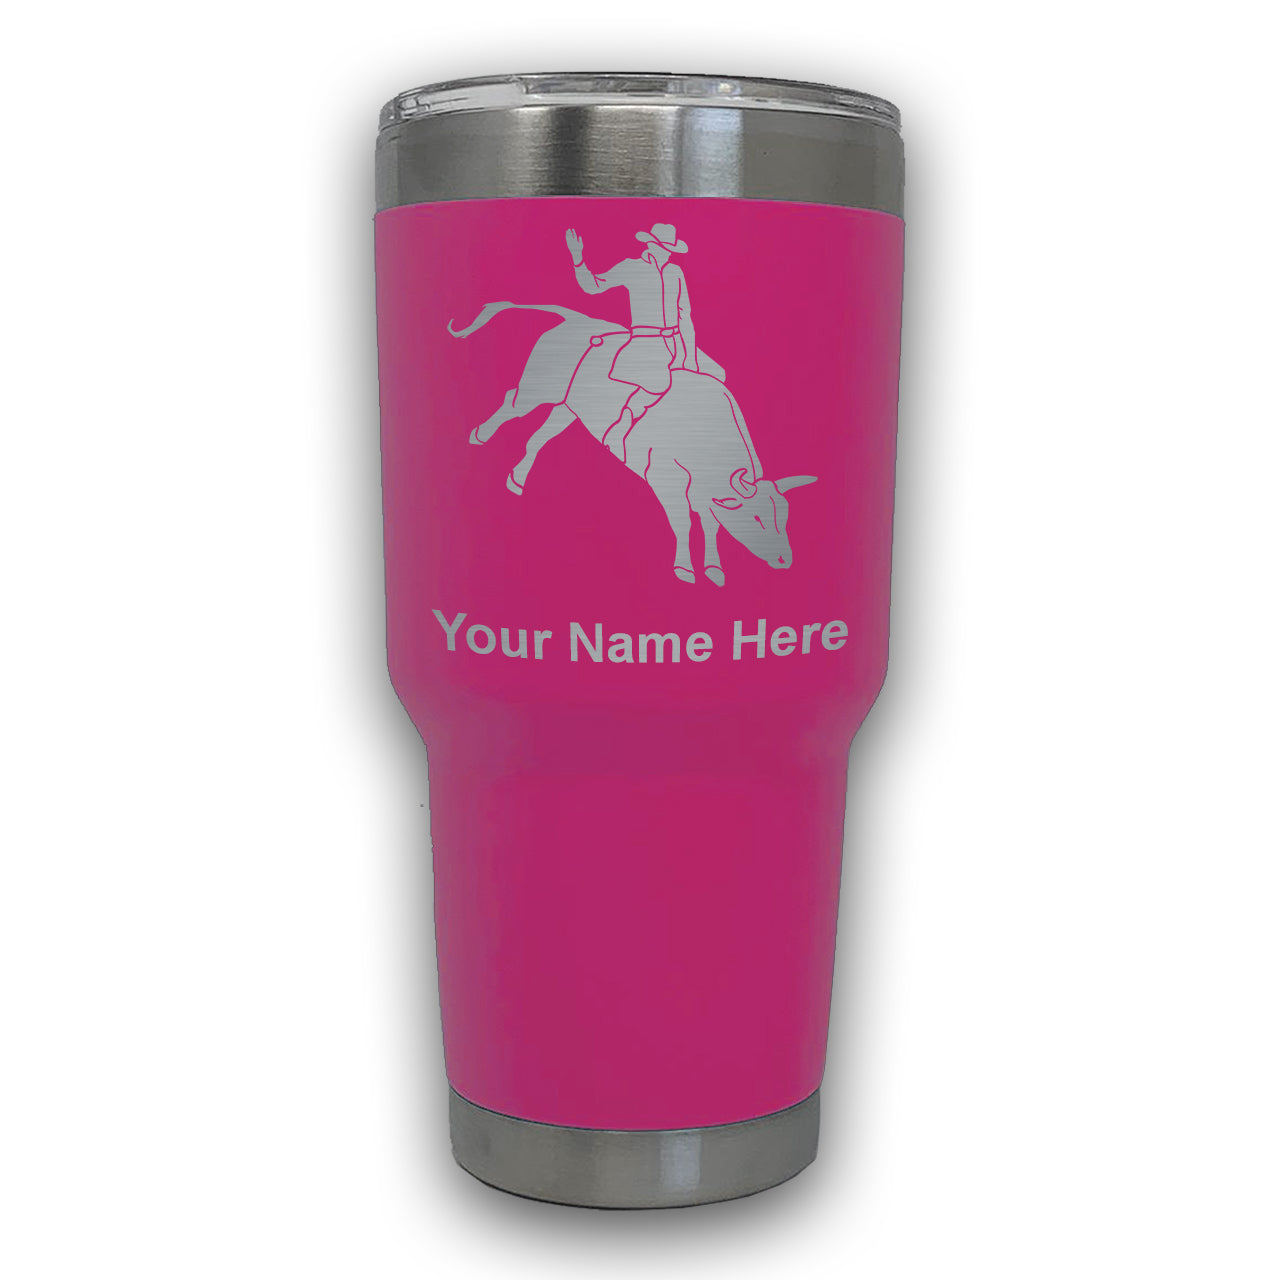 LaserGram 30oz Tumbler Mug, Bull Rider Cowboy, Personalized Engraving Included